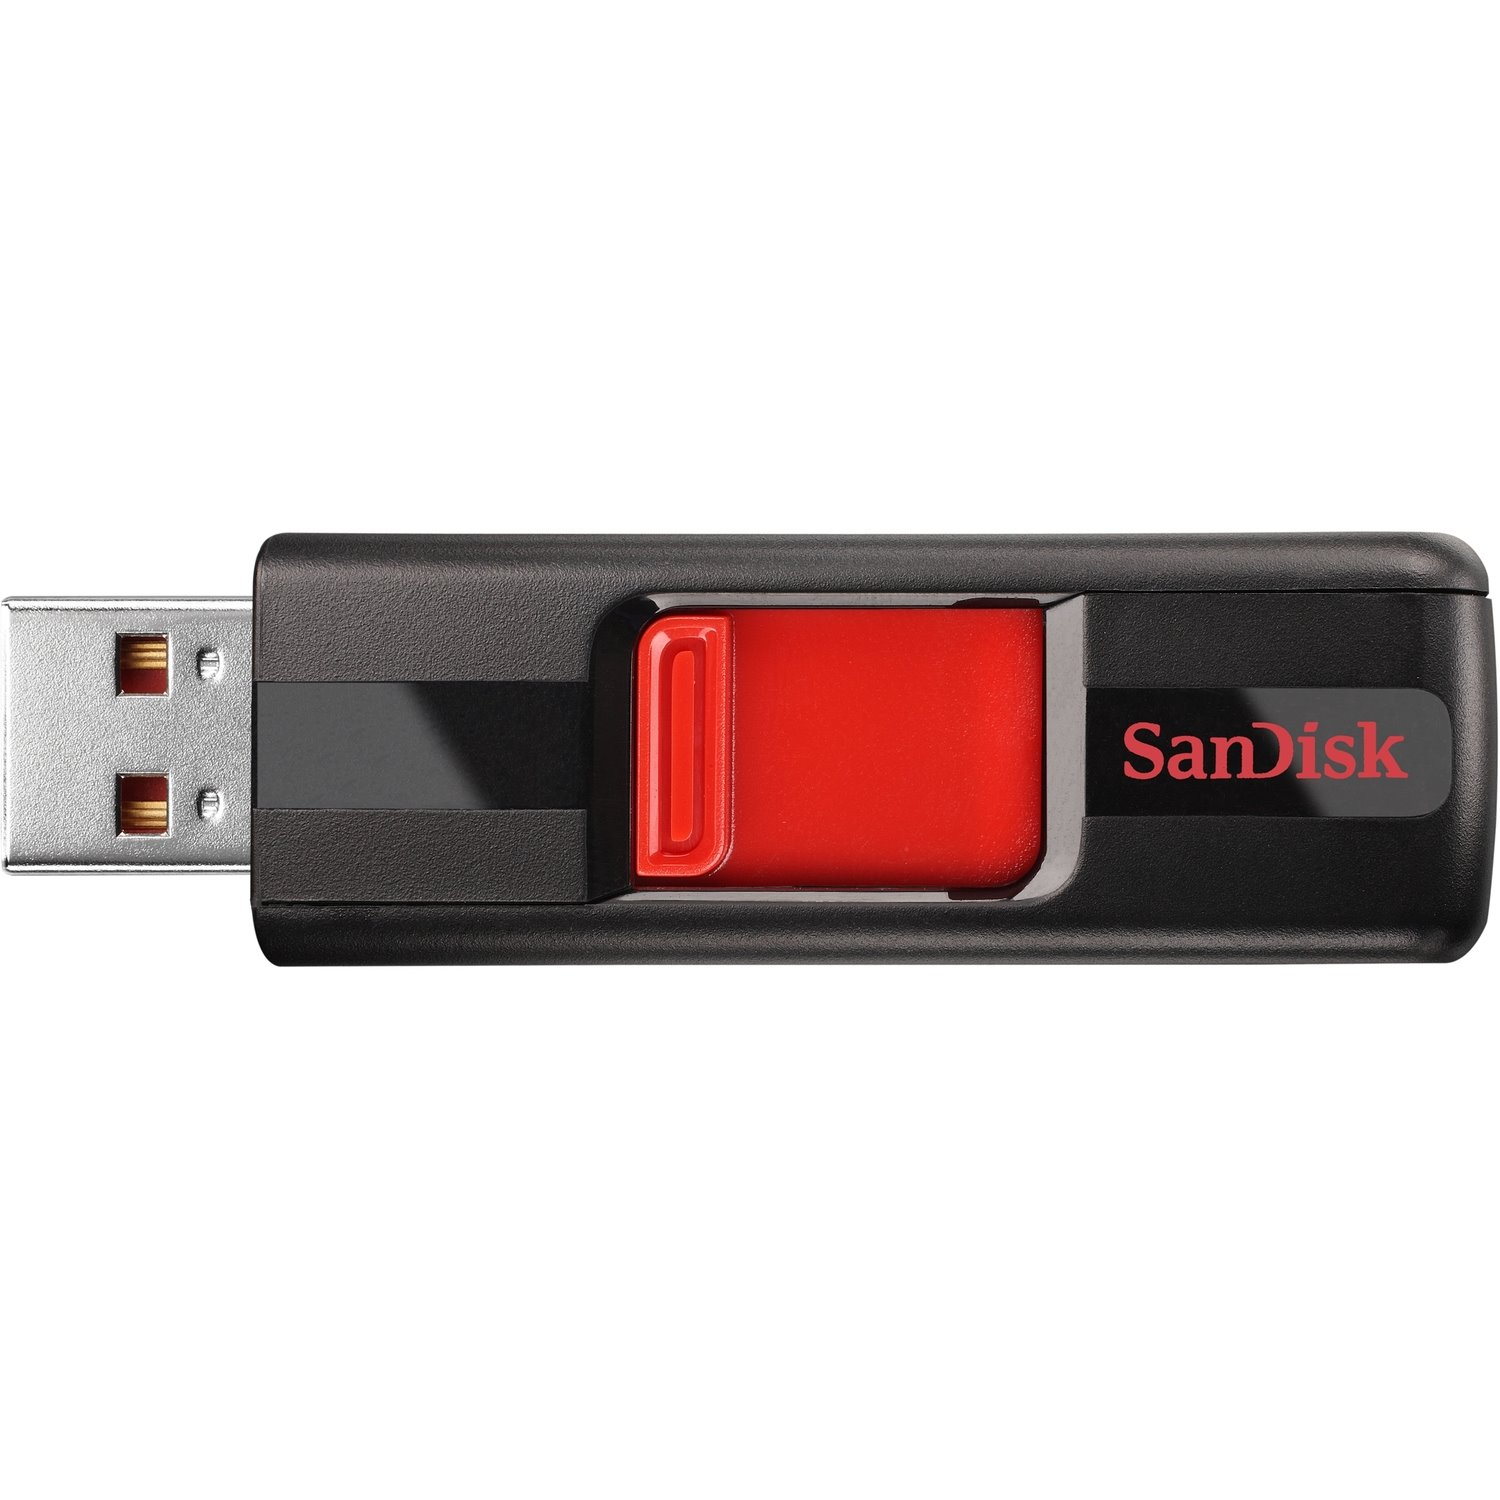 SanDisk 16GB Cruzer SDCZ36-016G-B35 USB 2.0 Flash Drive